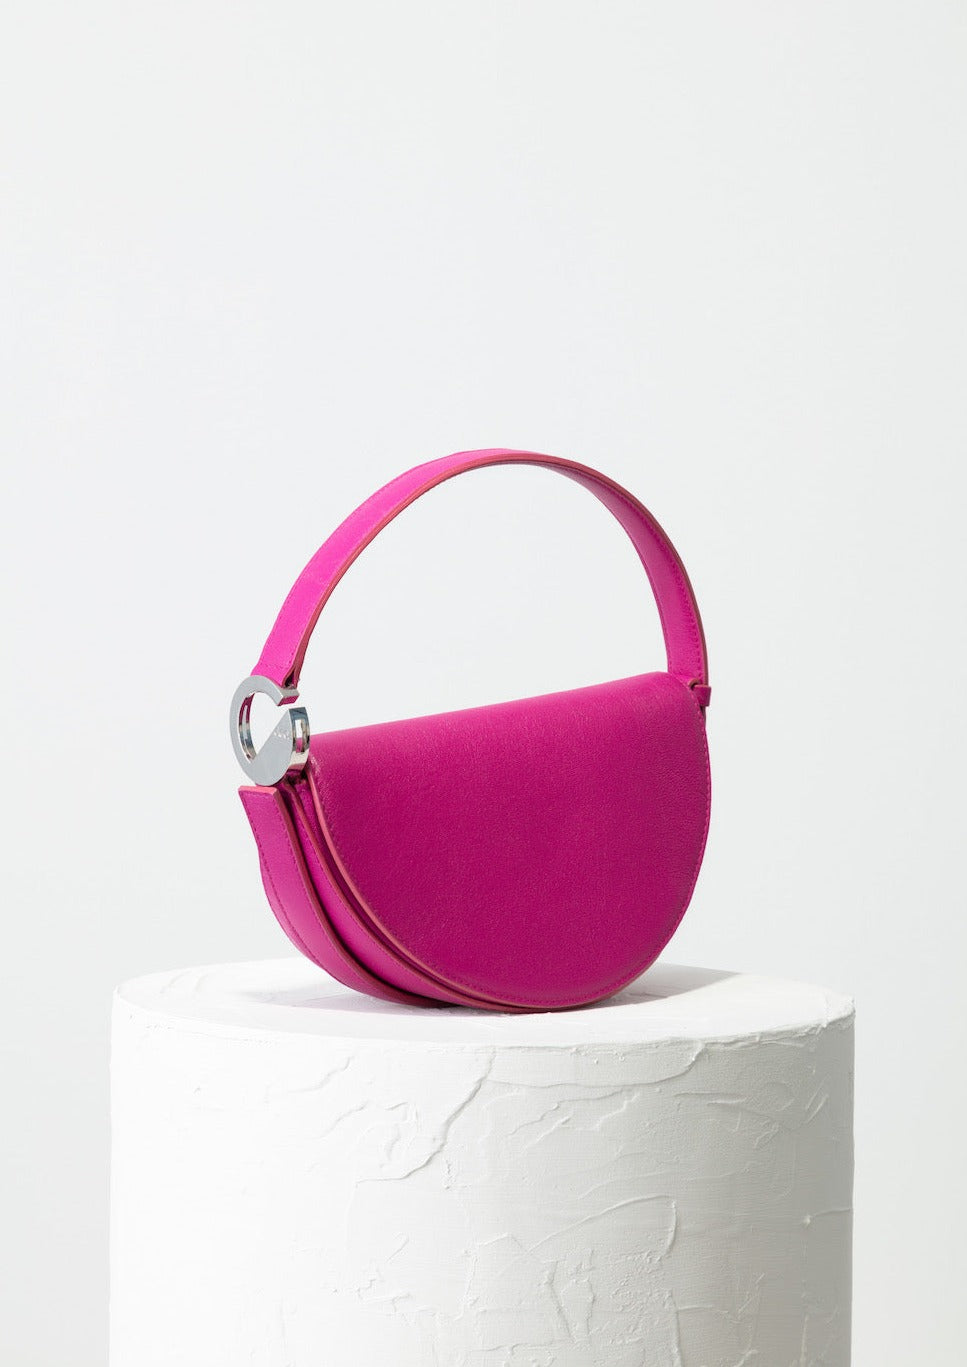 Dooz Sagittarius fuchsia pink leather half moon handbag with front magnetic flap and short strap